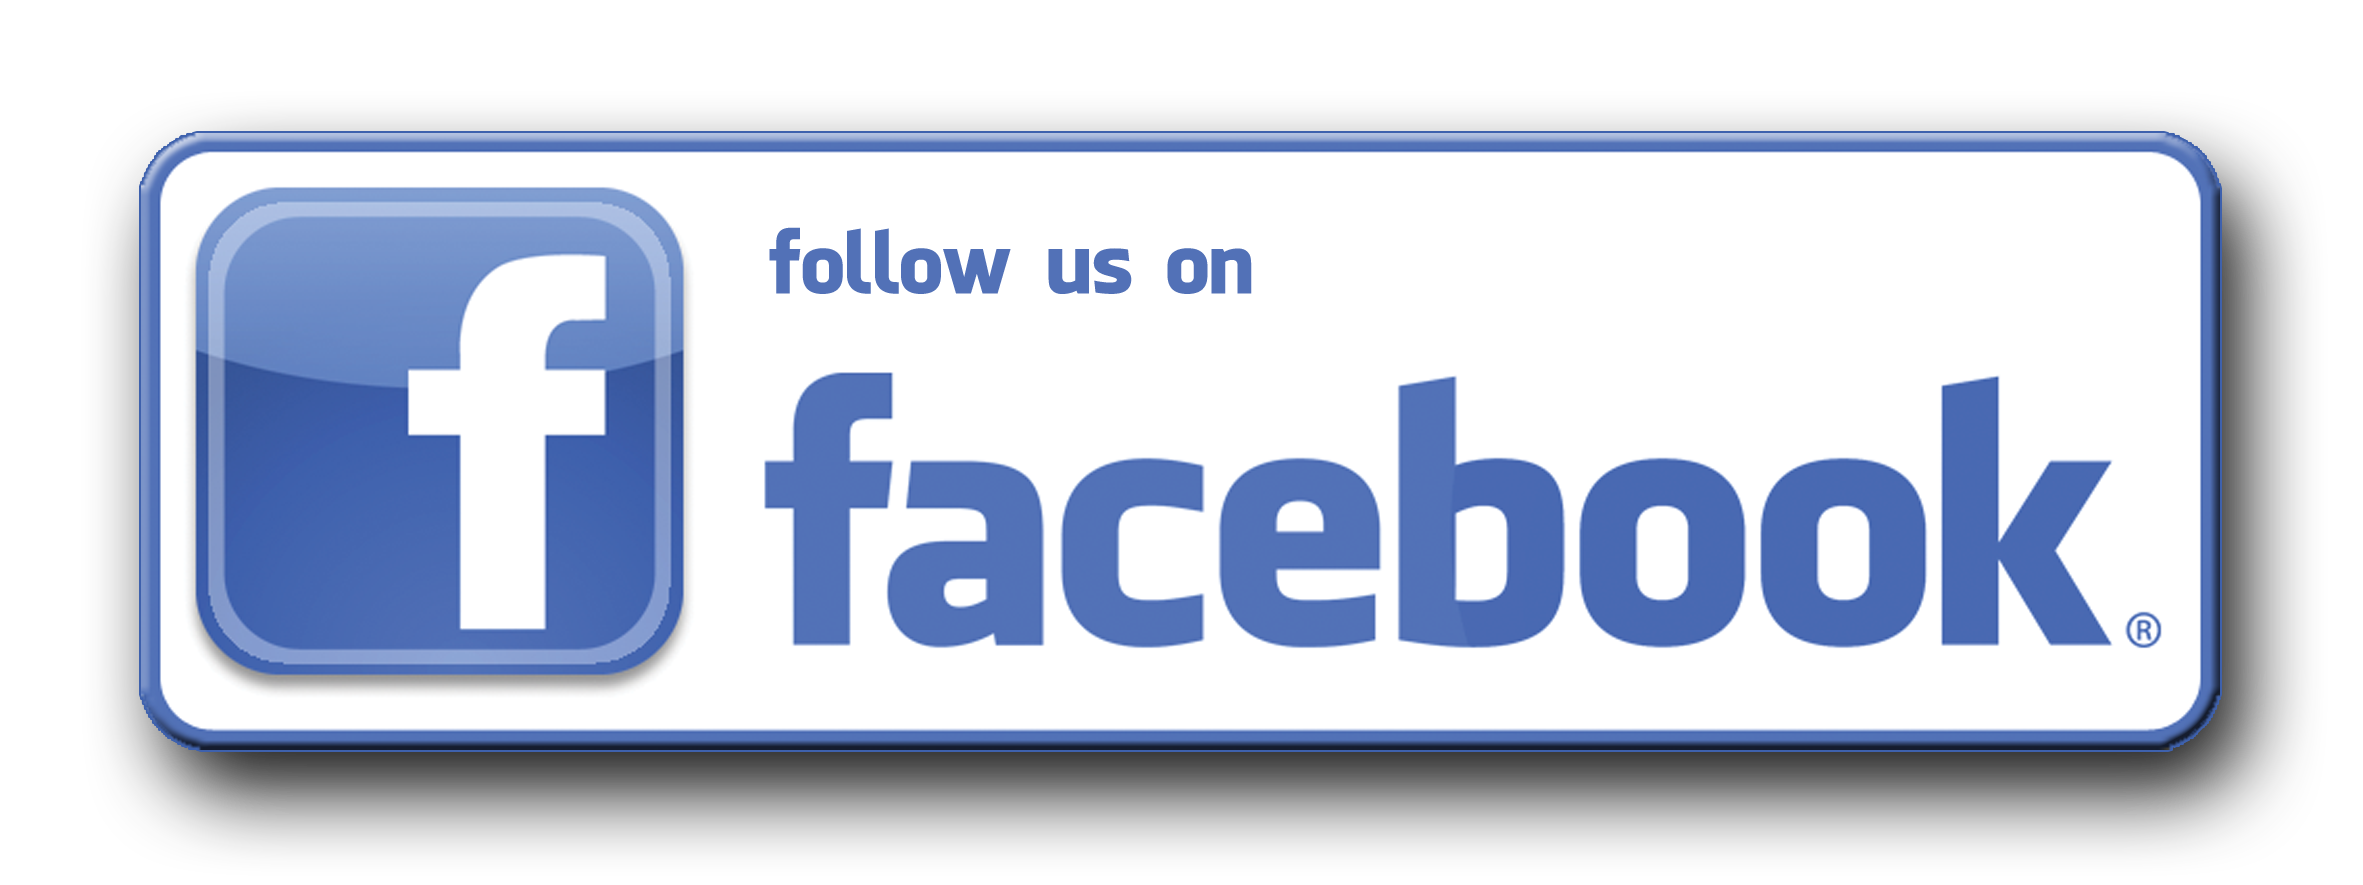 Follow us on Facebook logo